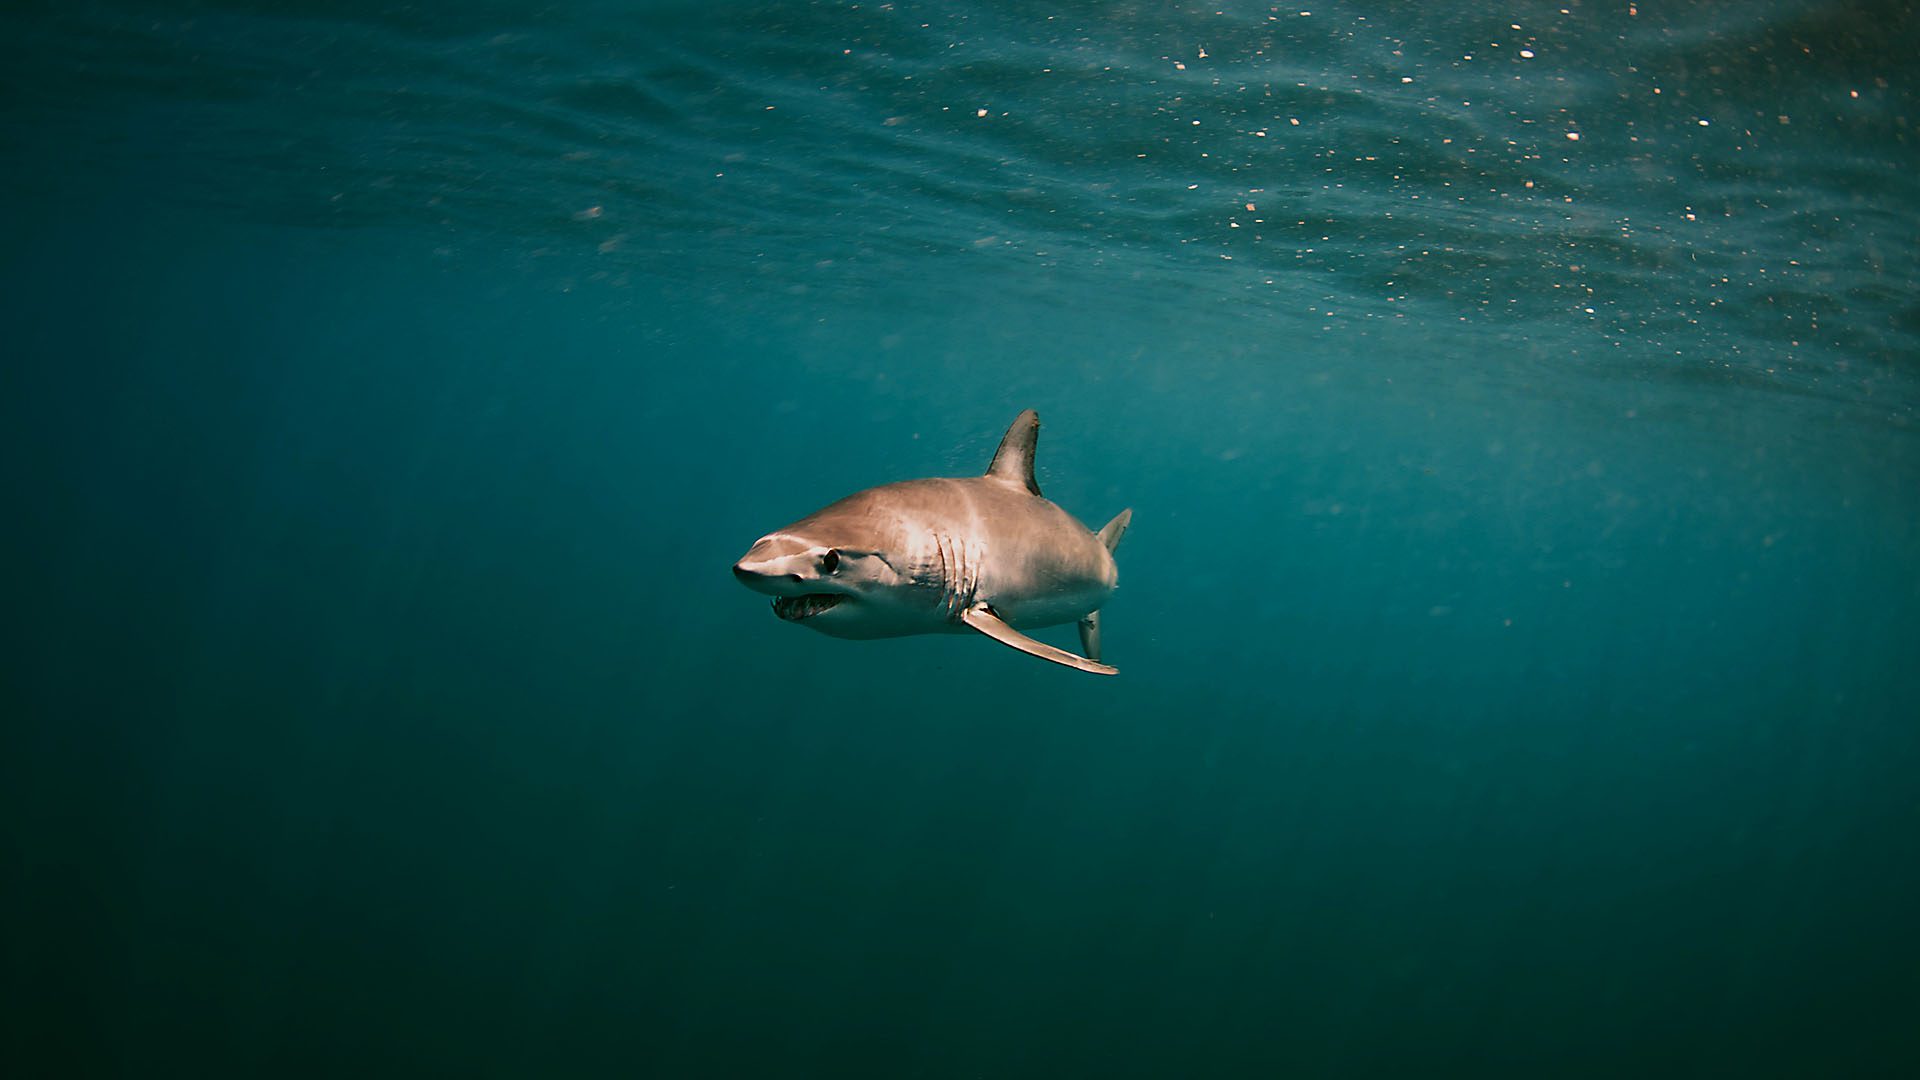 shortfin mako shark swimming in the water